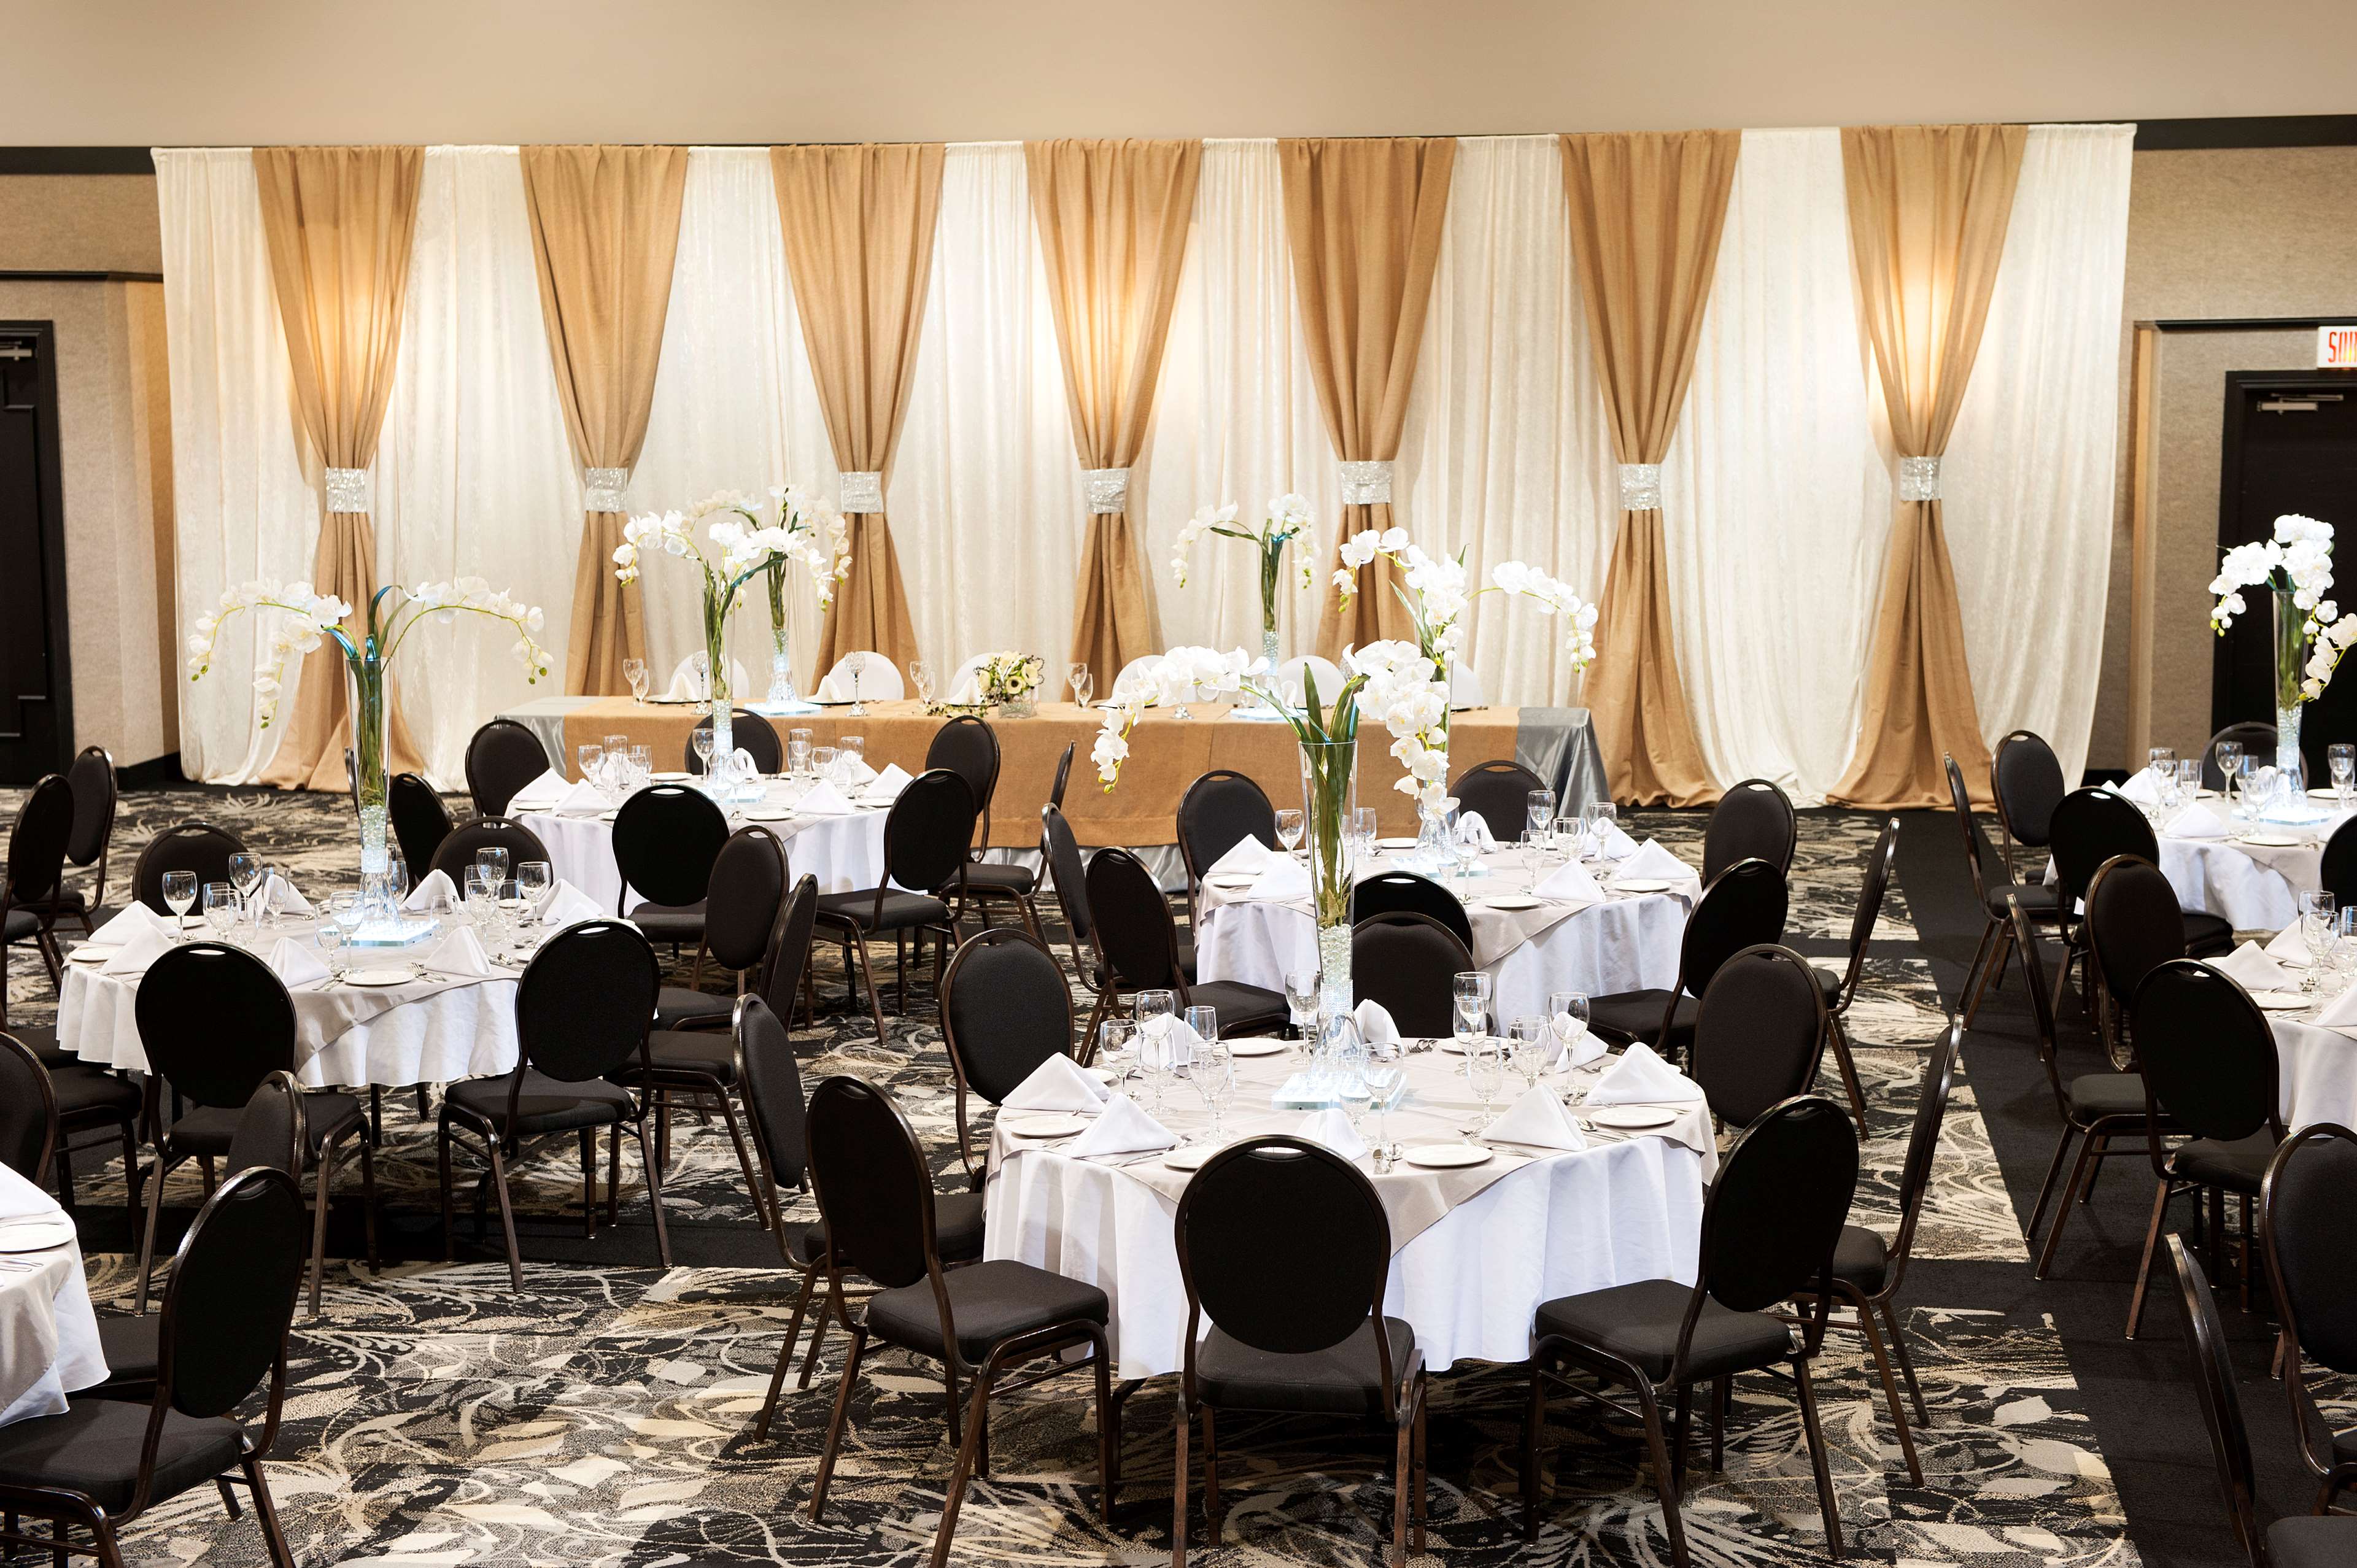 Banquet Room Best Western Hotel Universel Drummondville Drummondville (819)478-4971